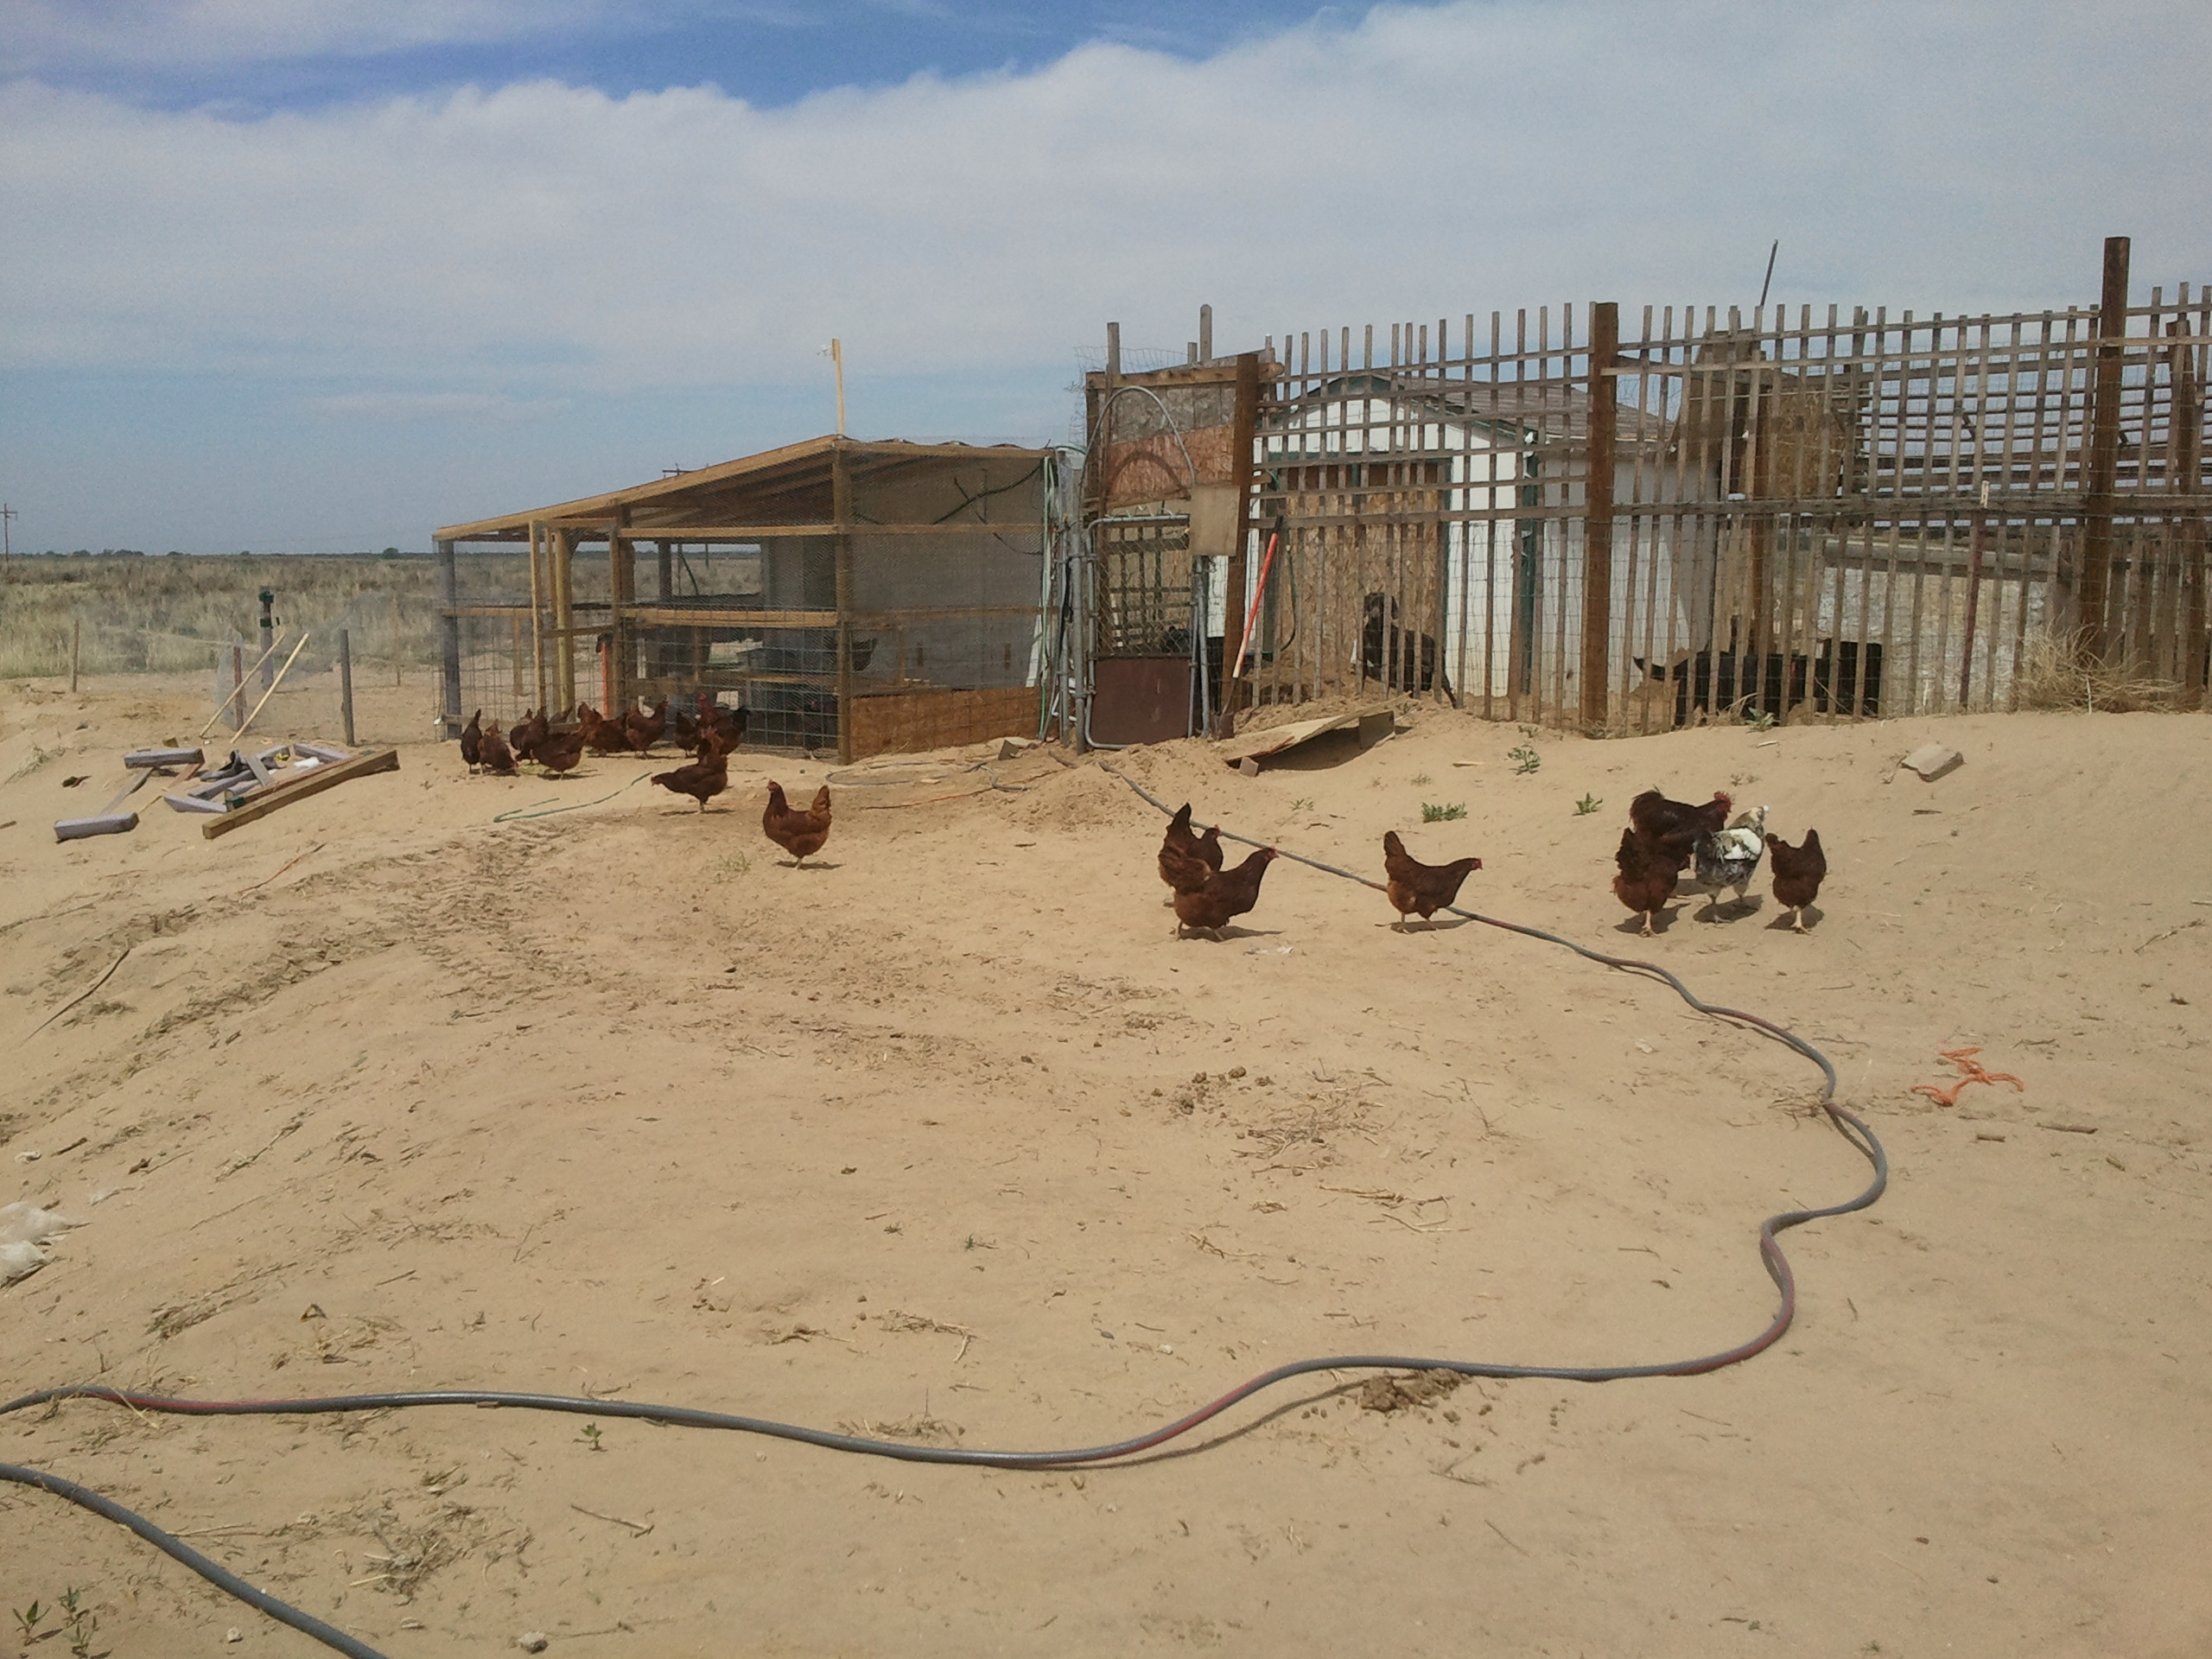 my coop:) my chickens enjoying the sunshine:)